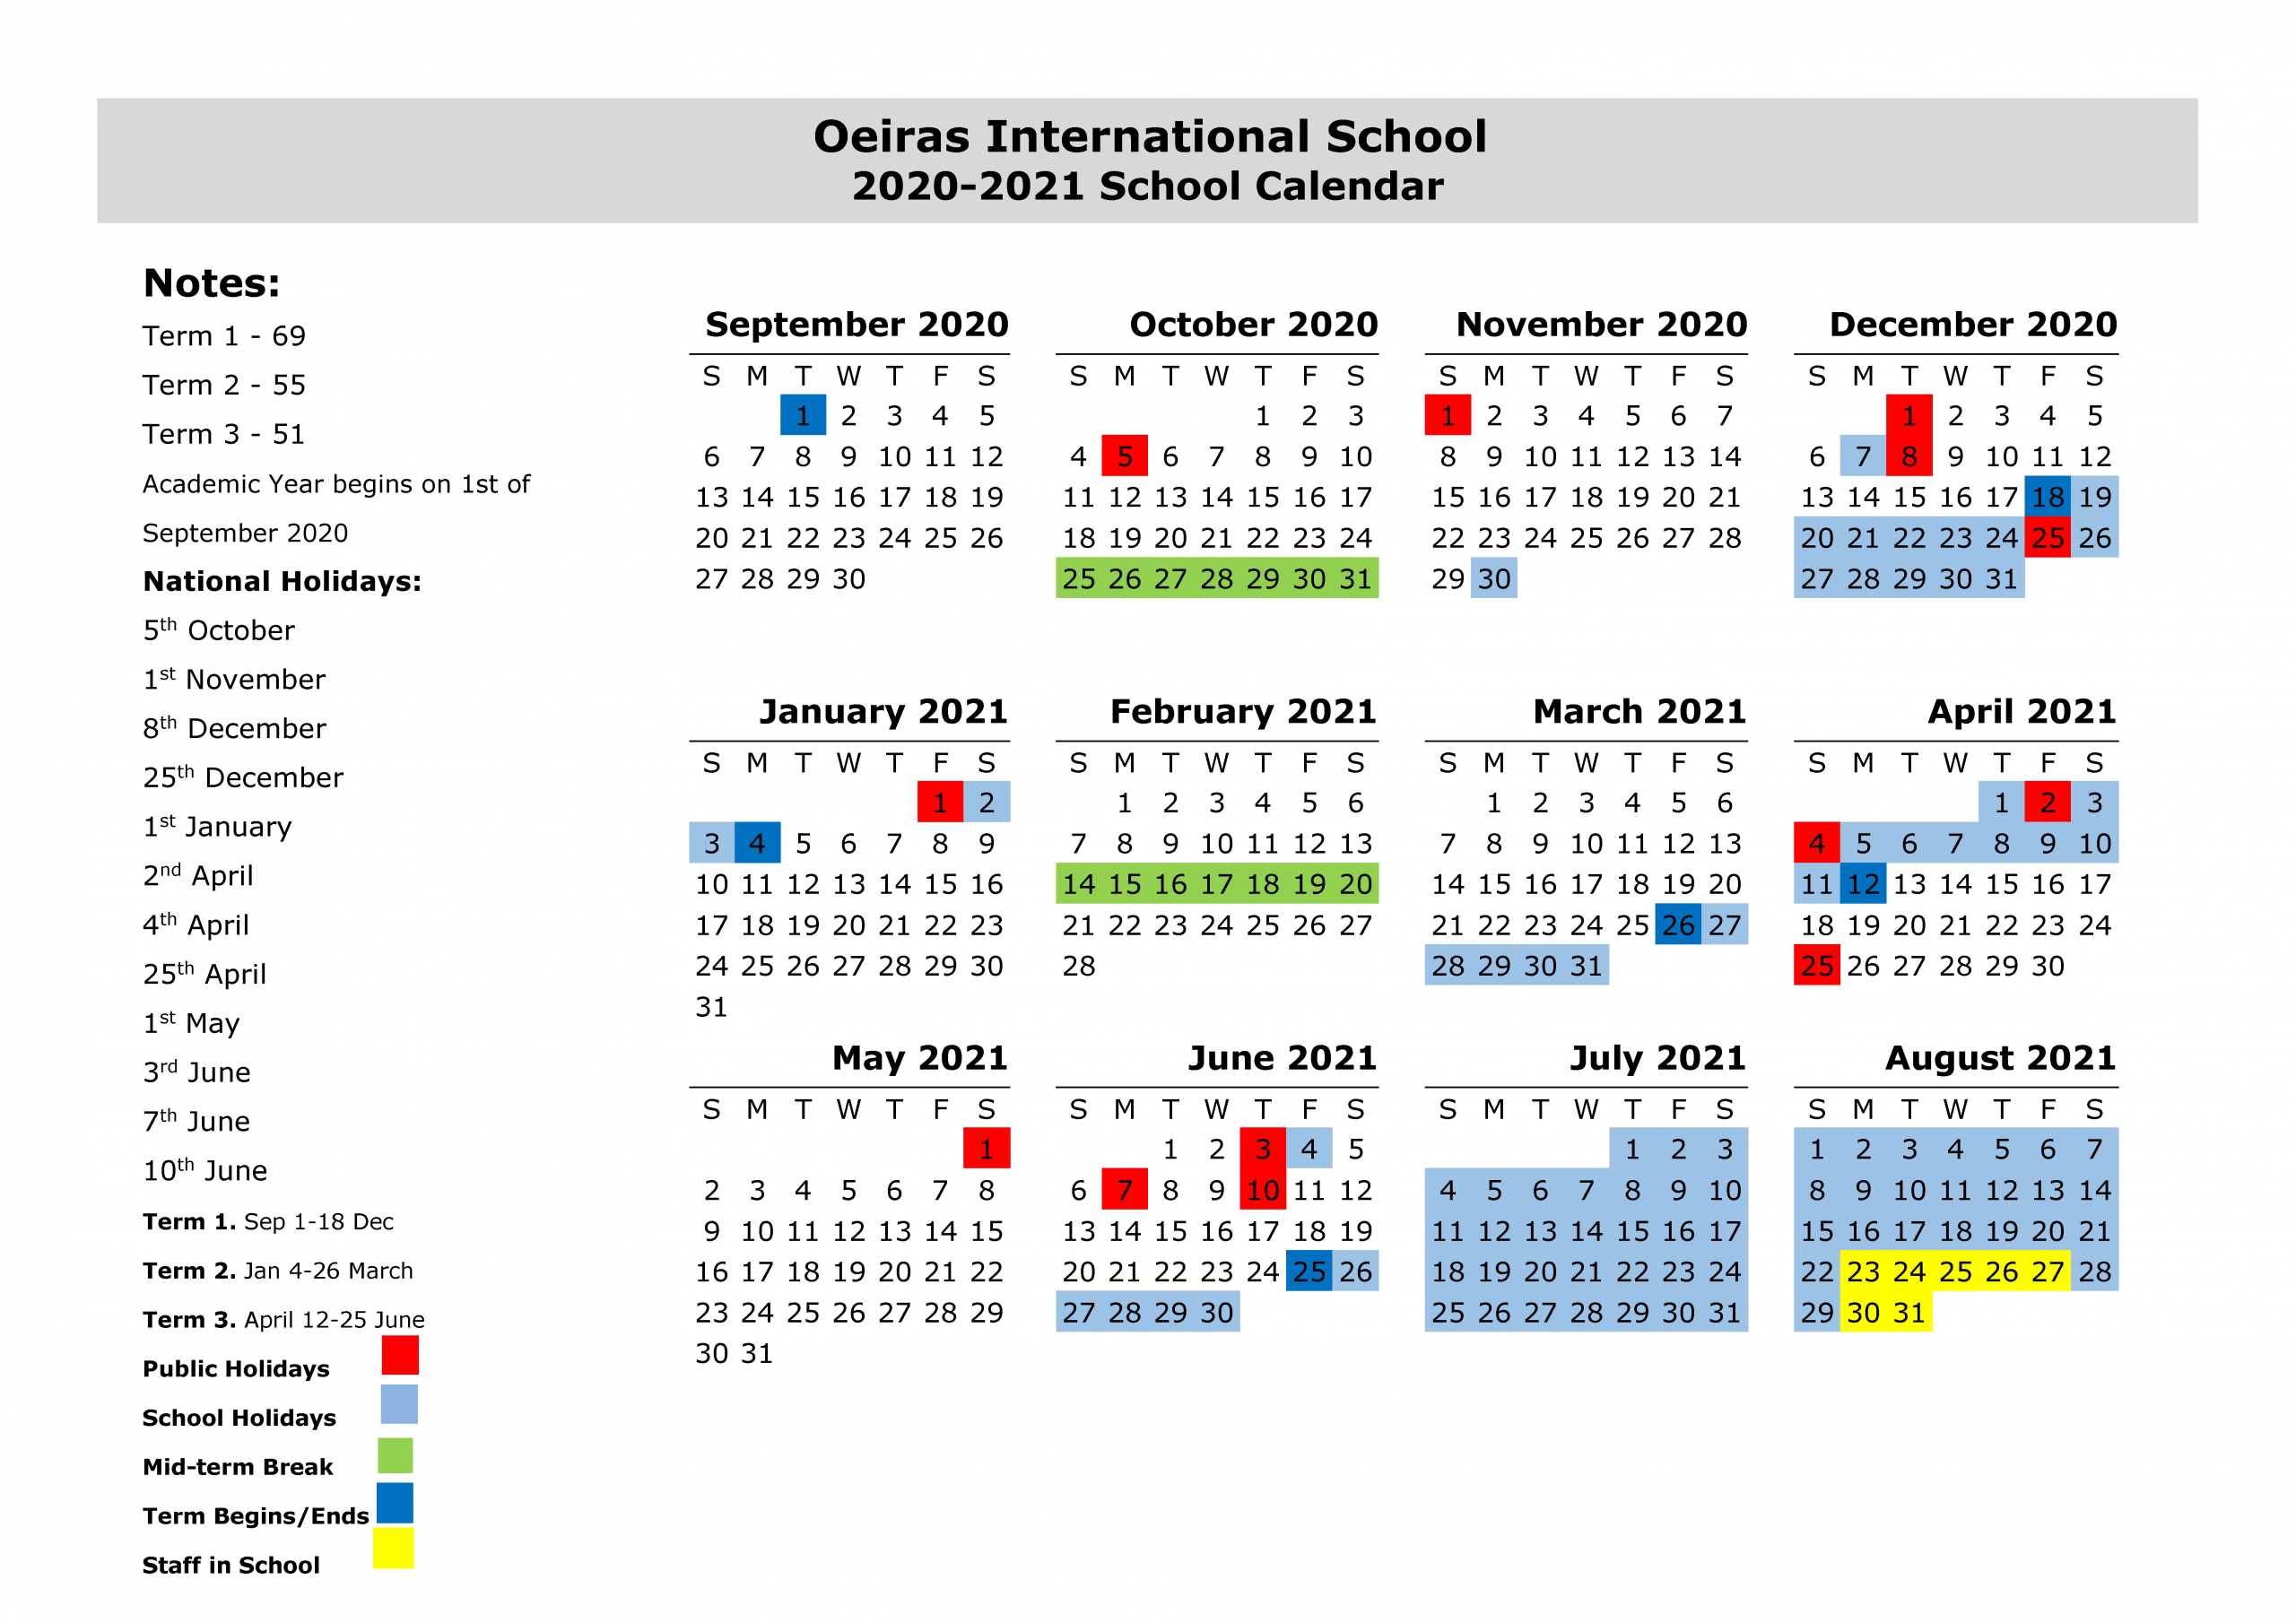 Ois School Calendar 2019-20 – Oeiras International School